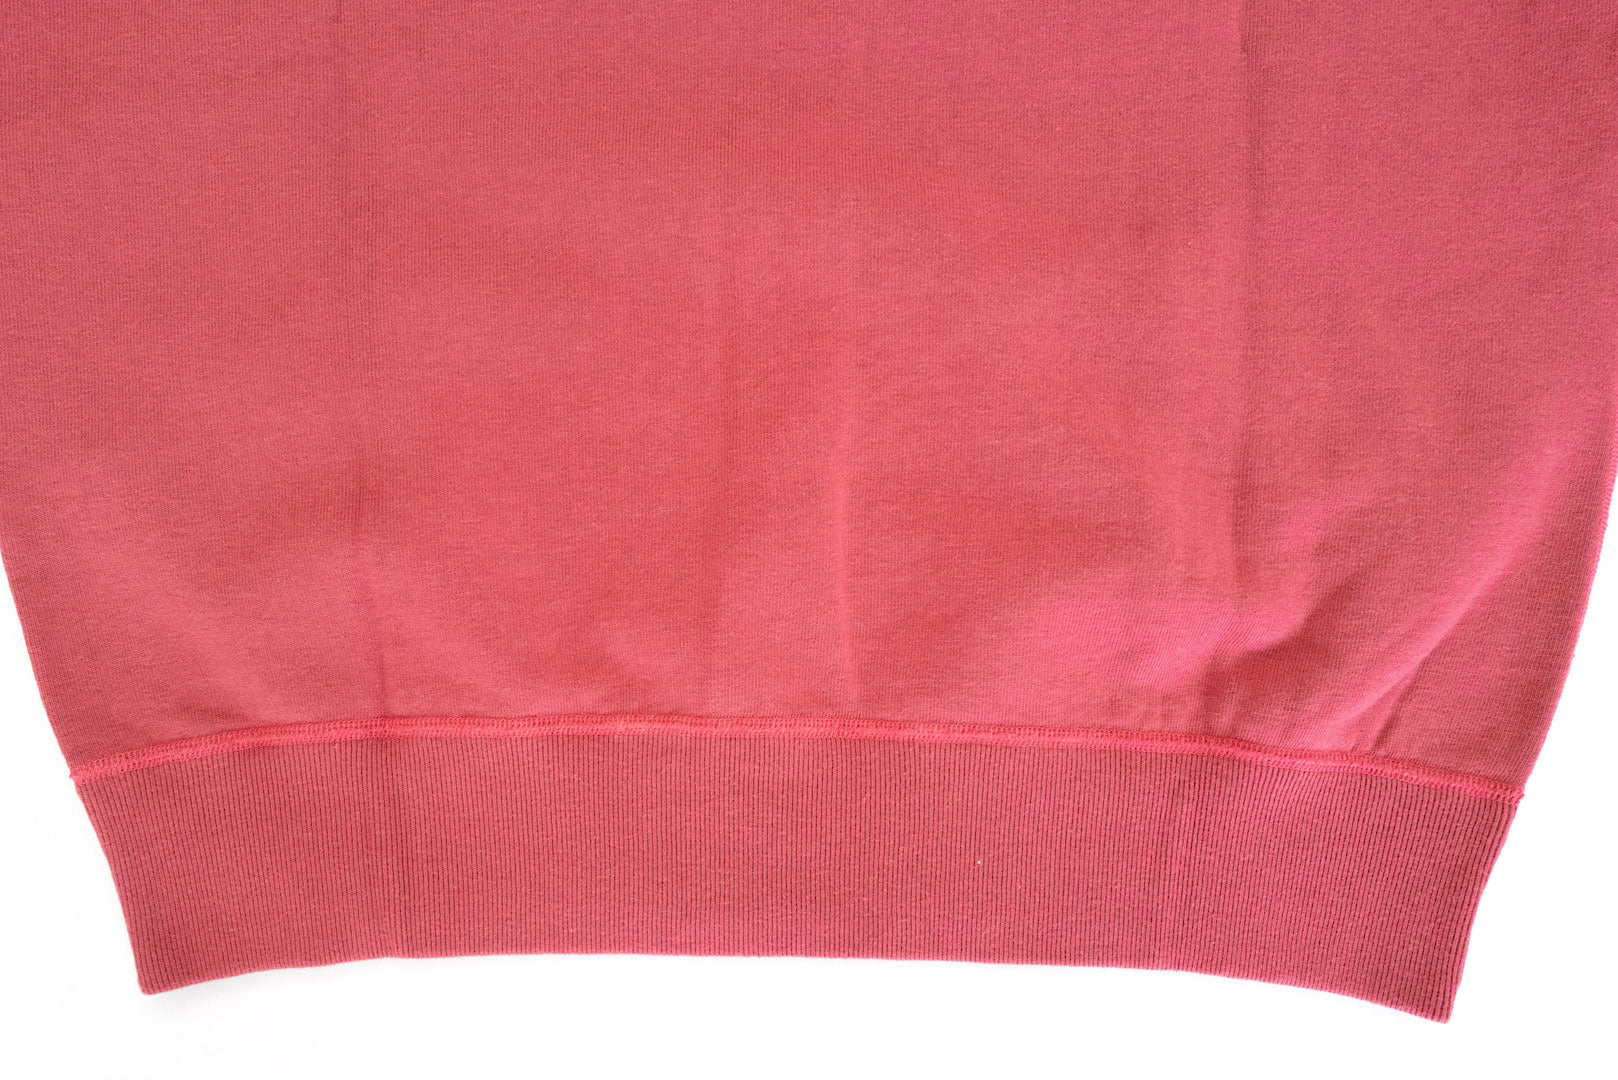 The Flat Head 11oz "Flat-Seamer" Super-Slow Loopwheeled Sweatshirt (Pale Red)